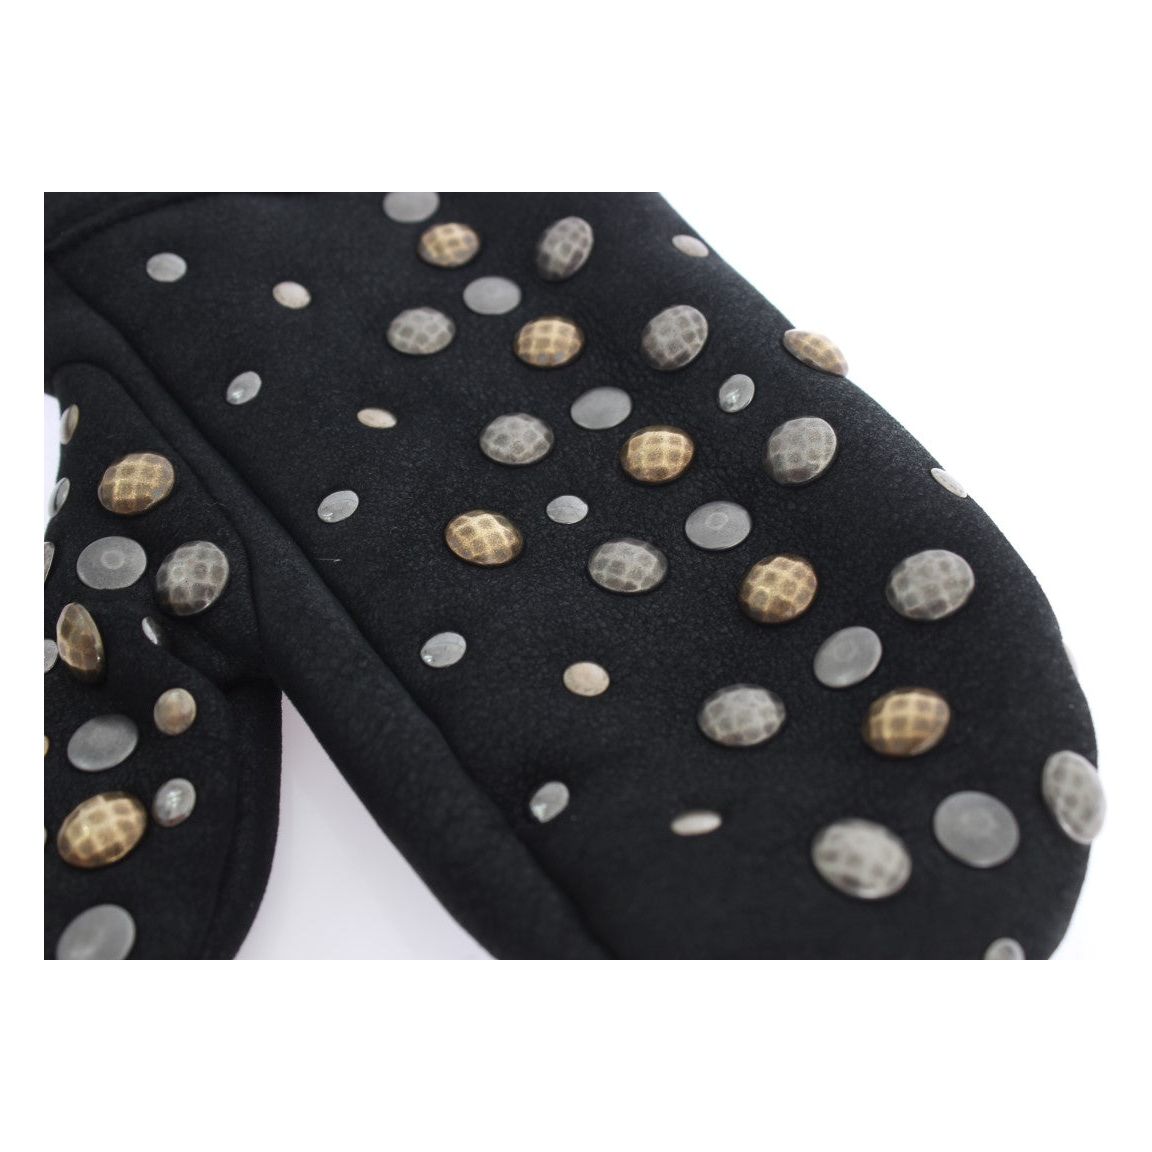 Dolce & Gabbana Elegant Studded Gray Wool Gloves gray-wool-shearling-studded-gloves